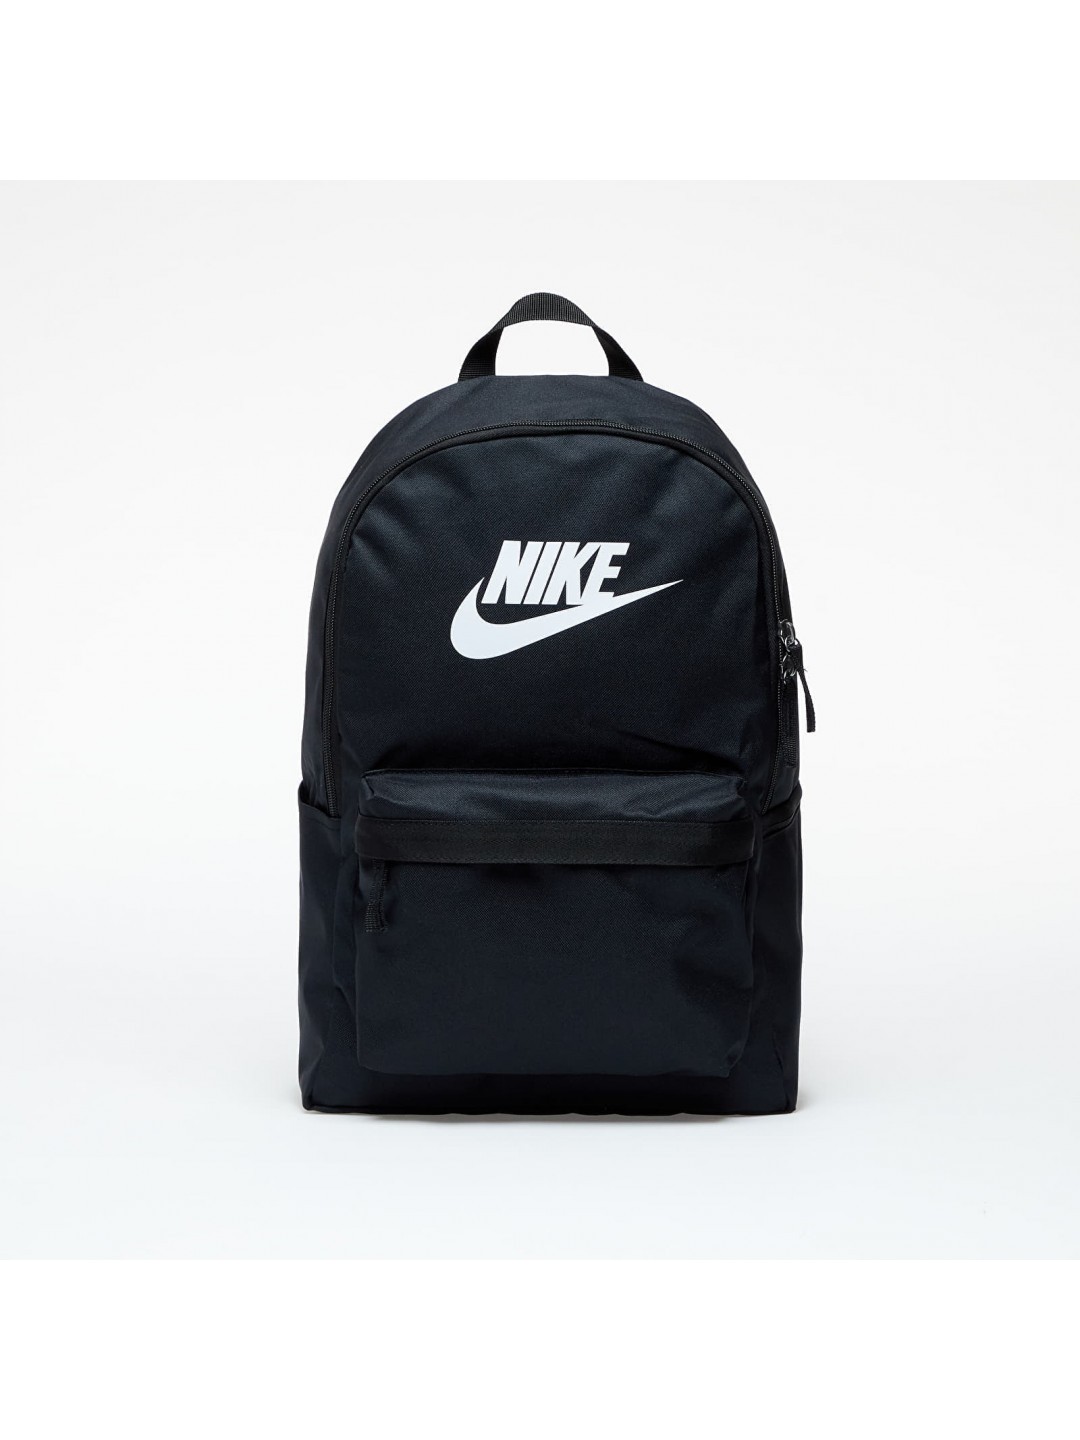 Nike Heritage Backpack Black Black White